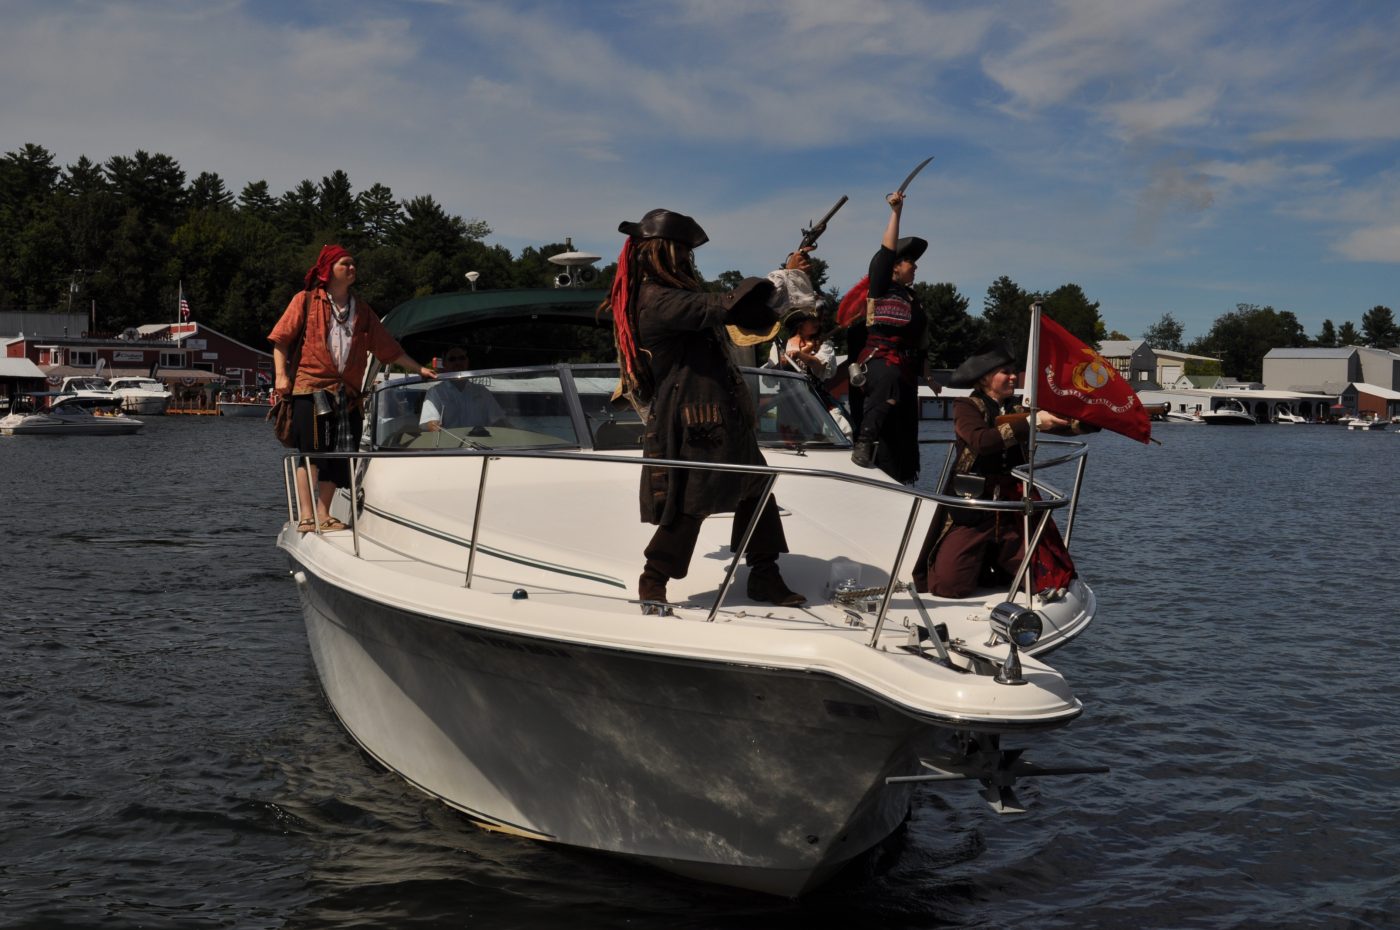 Pirates on a speedboat.